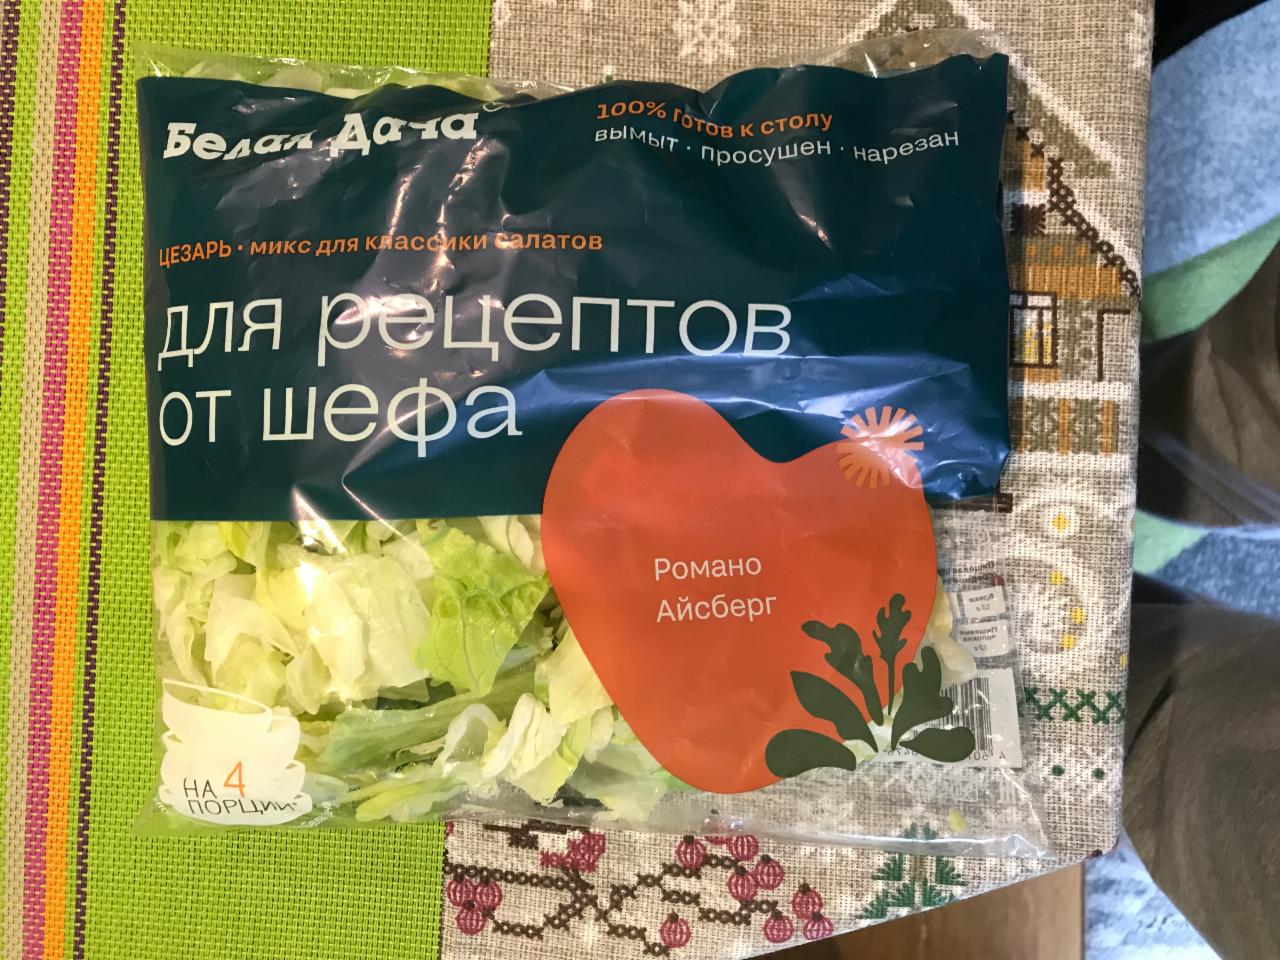 Фото - цезарь микс для классики салатов Белая Дача